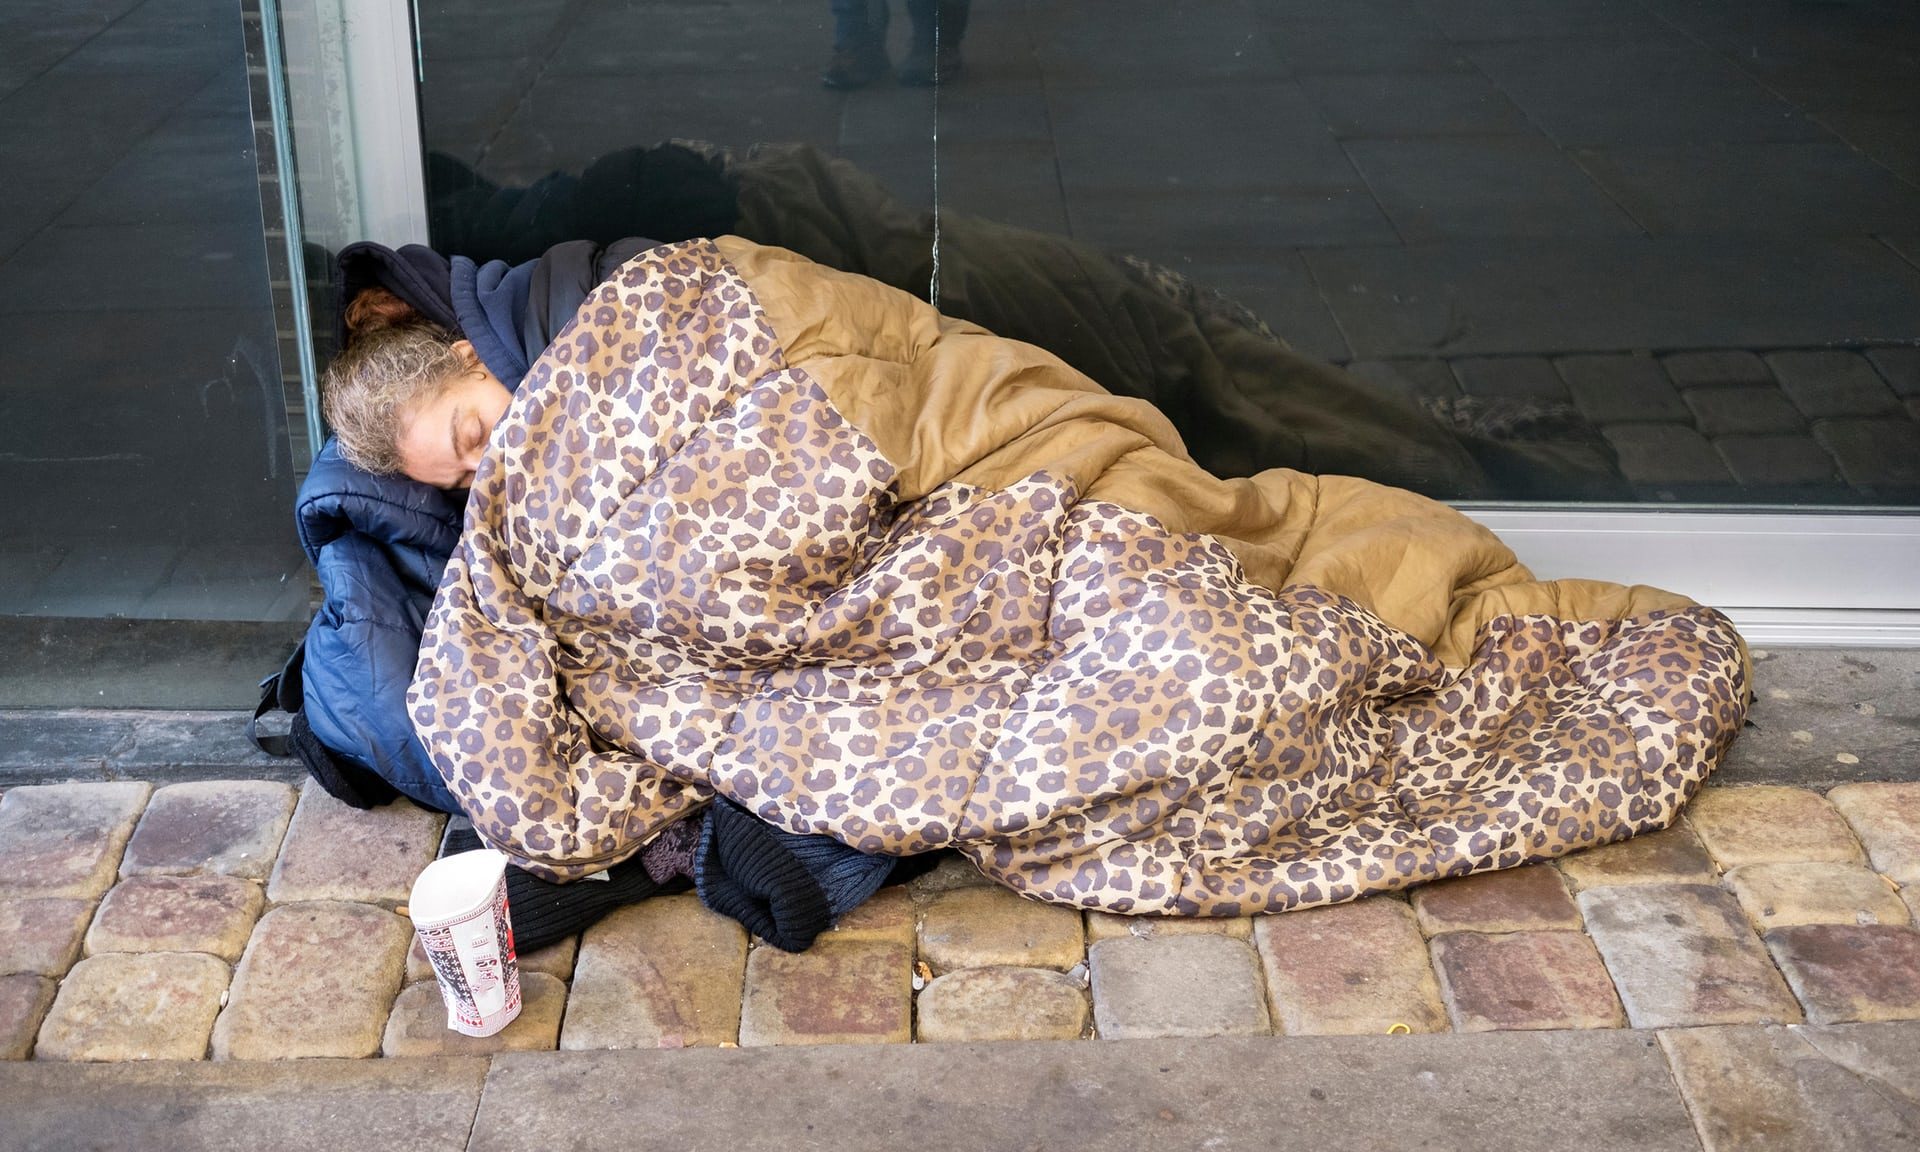 homeless street sleep rough uk